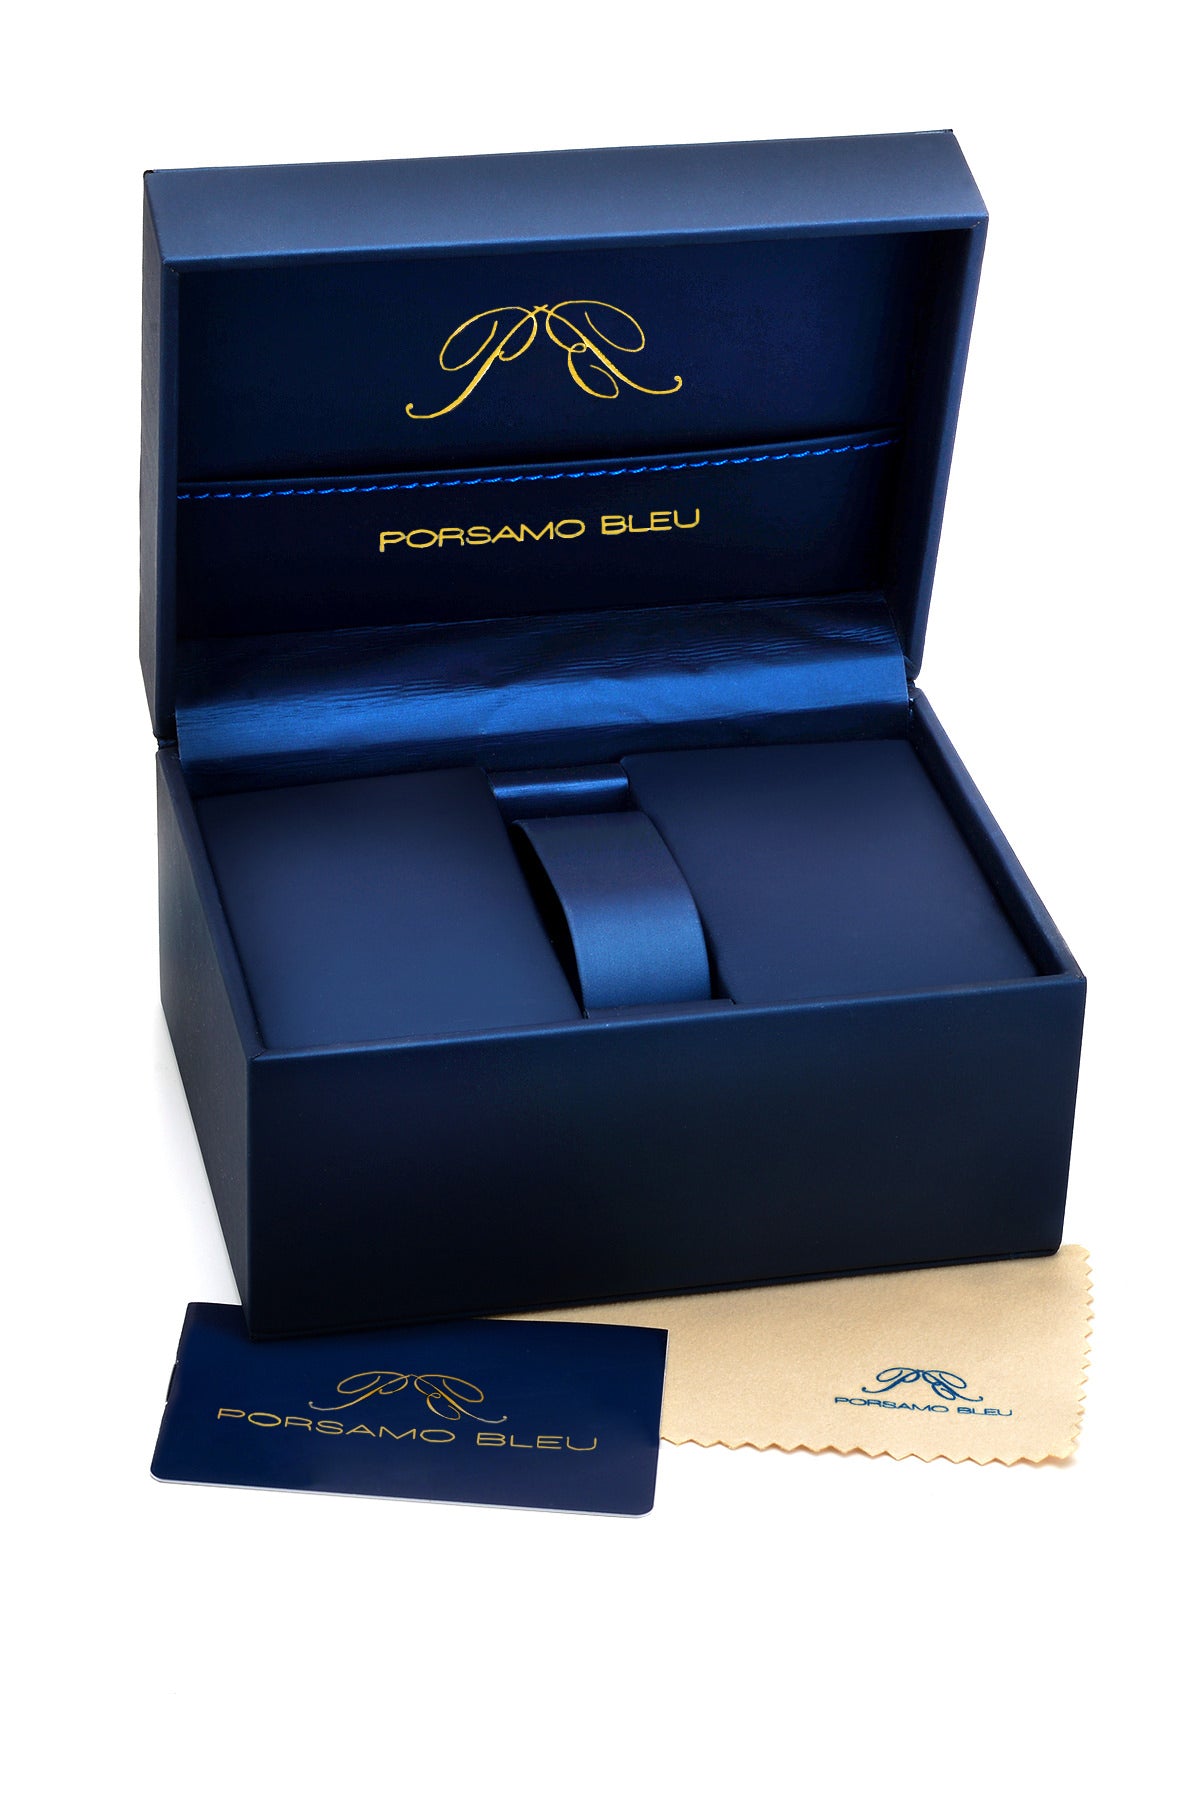 Porsamo Bleu NYC Moon luxury men's watch, genuine leather band, rose, blue 058CNYL